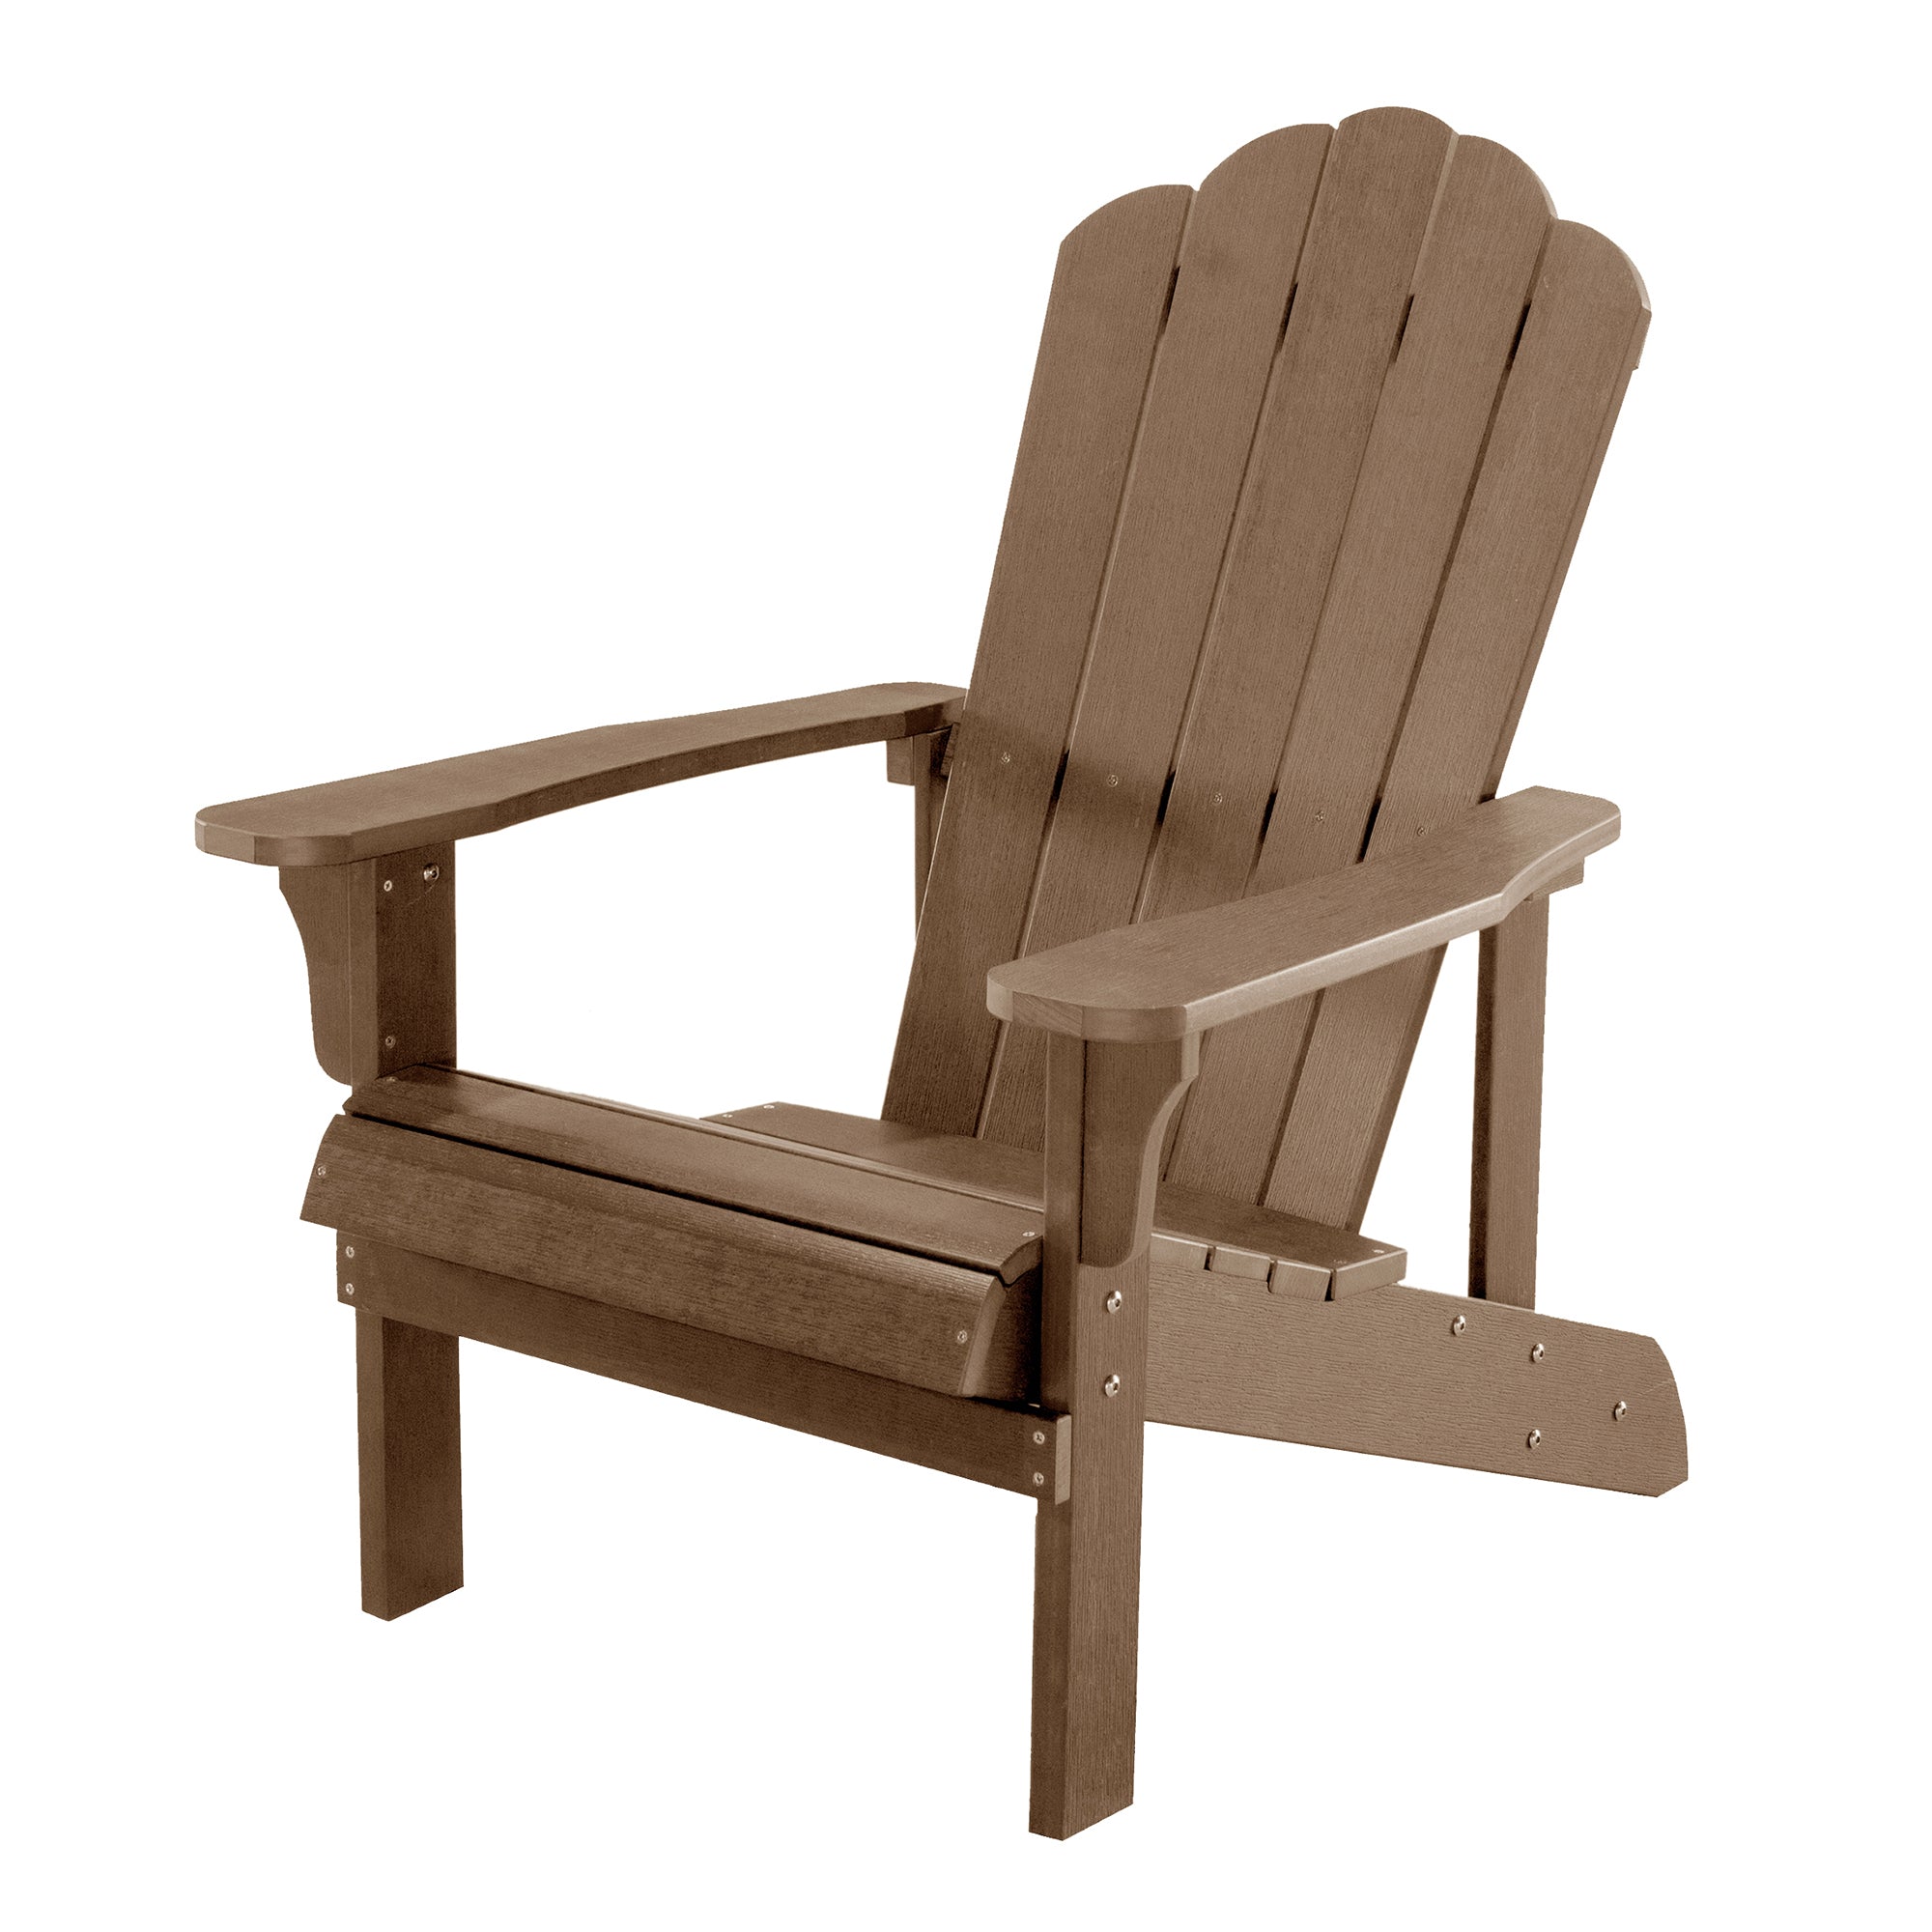 Key West Outdoor Plastic Wood Adirondack Chair, Patio brown-polyethylene